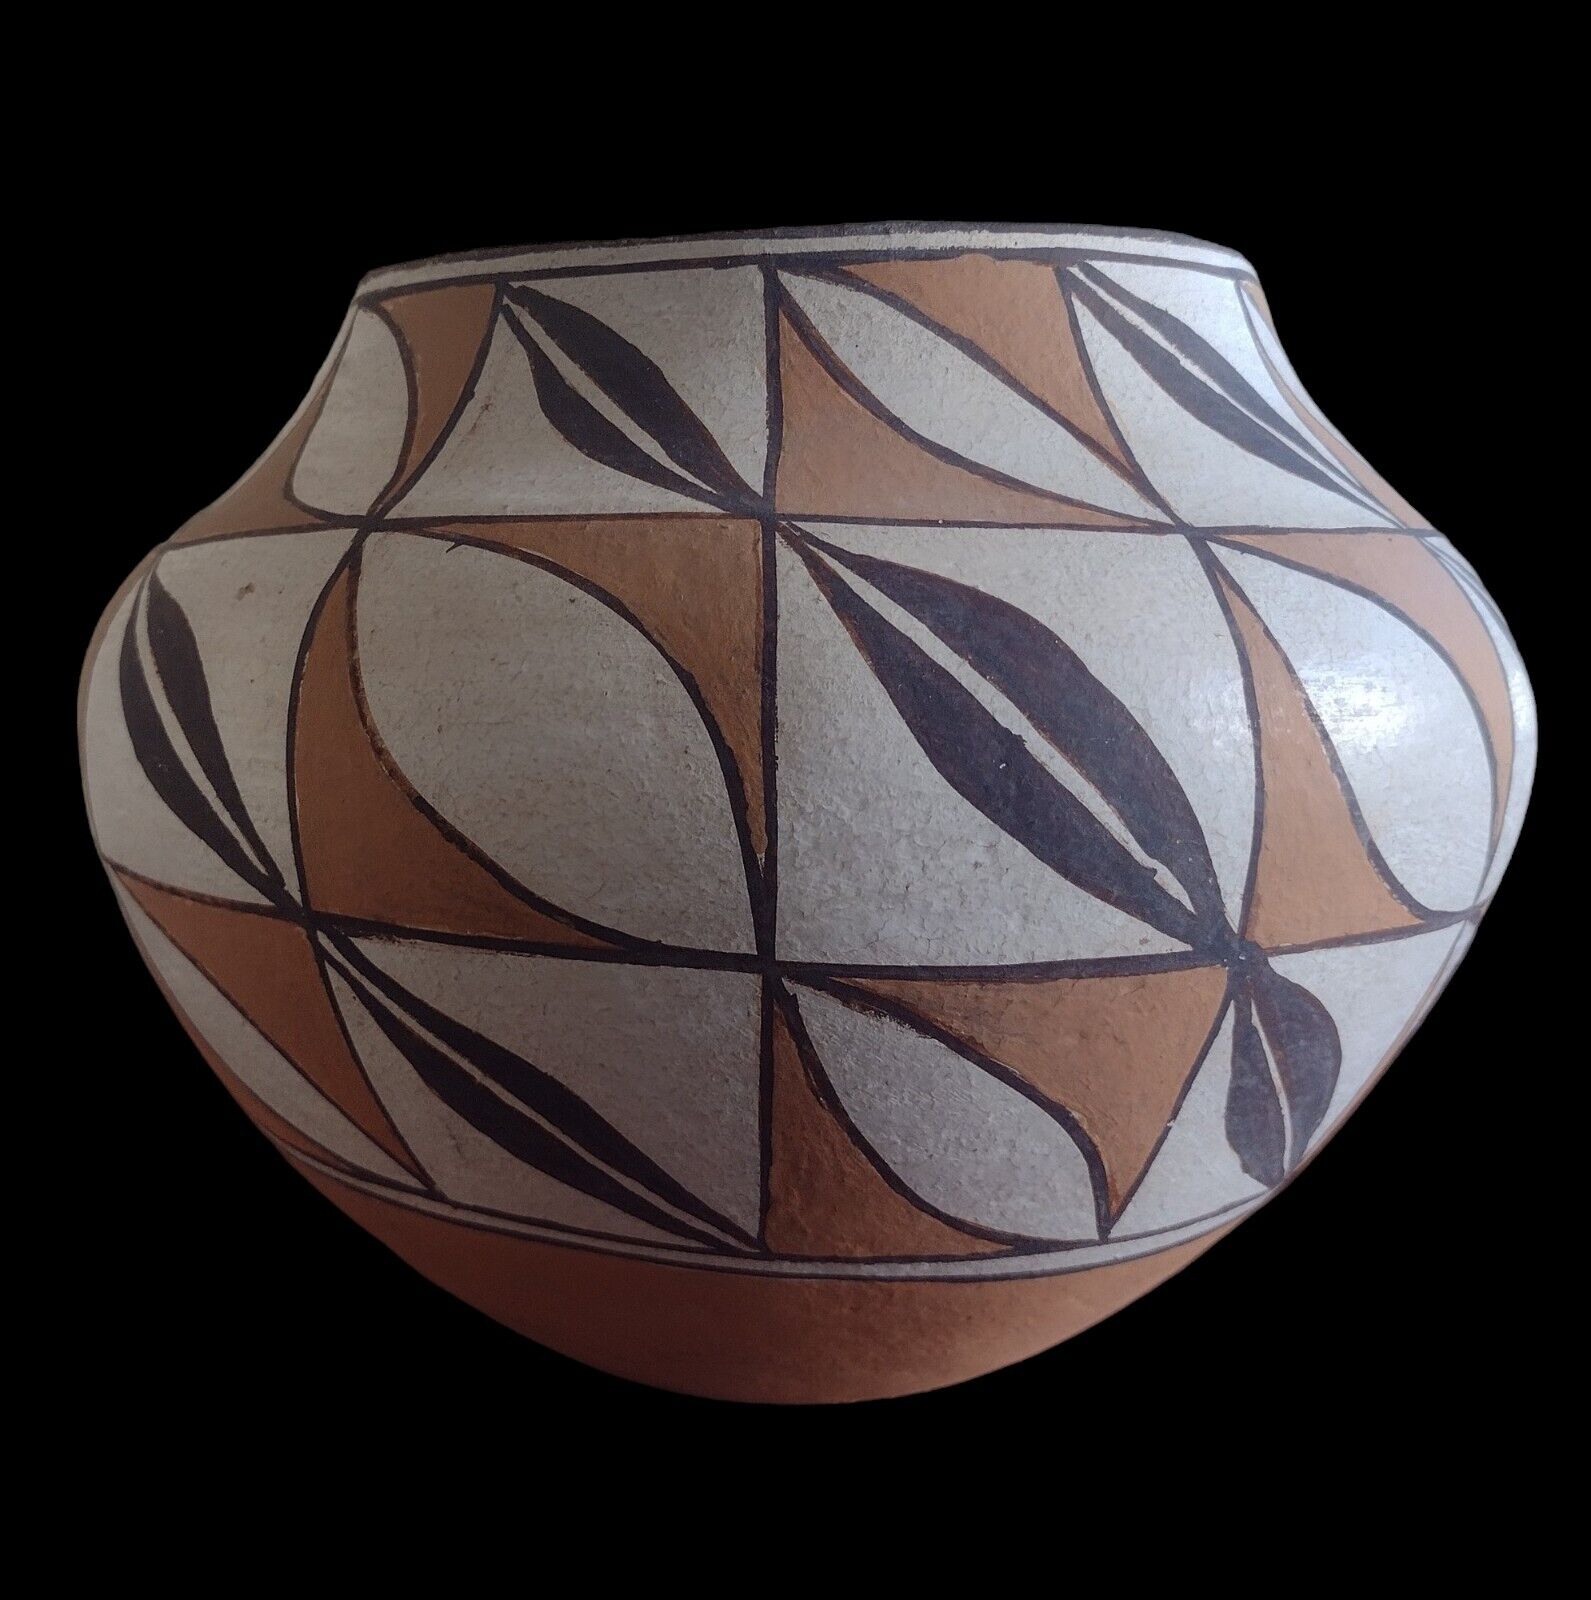 Classic Acoma Pueblo Polychrome Olla Pottery Jar Vintage Native American  7